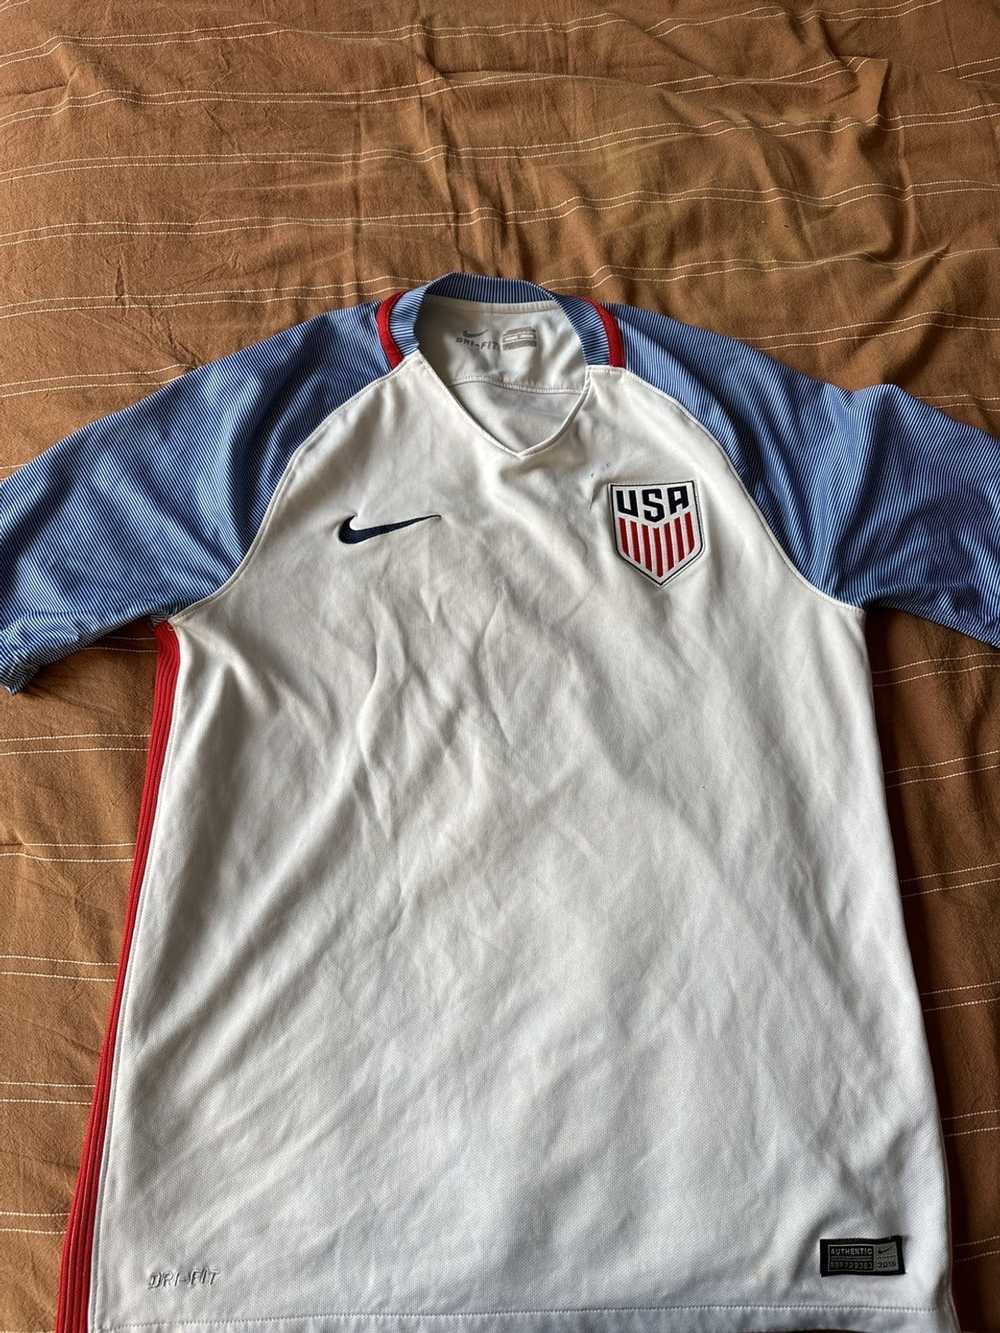 Nike USA Soccer jersey 2016 - image 1